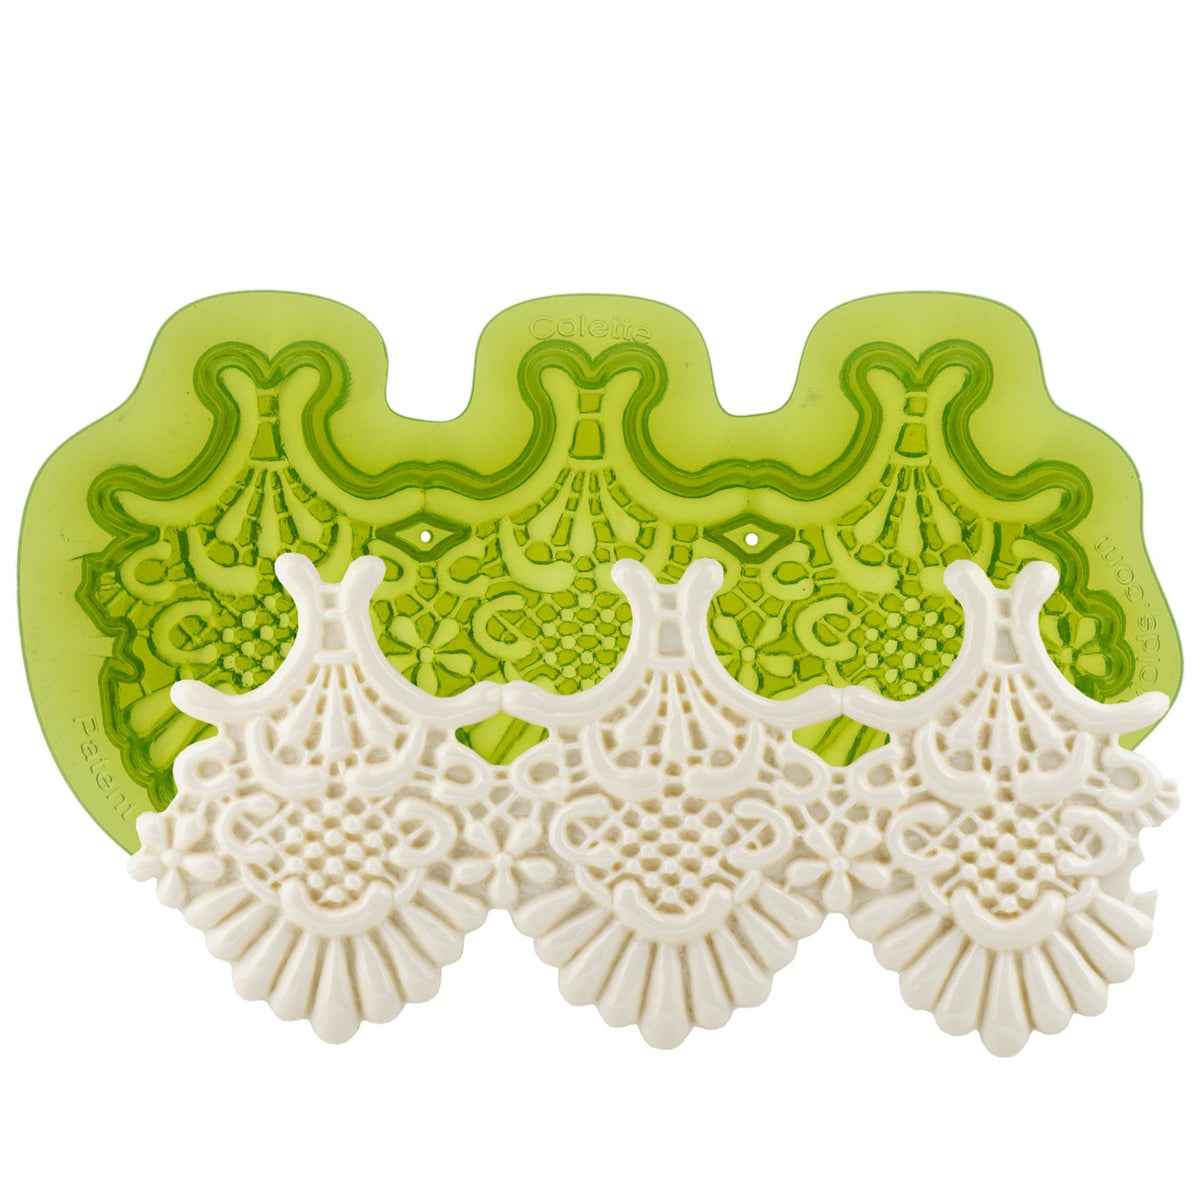 Chris Lace Food Safe Silicone Mold for Cake Design or DIY Ceramics –  Marvelous Molds